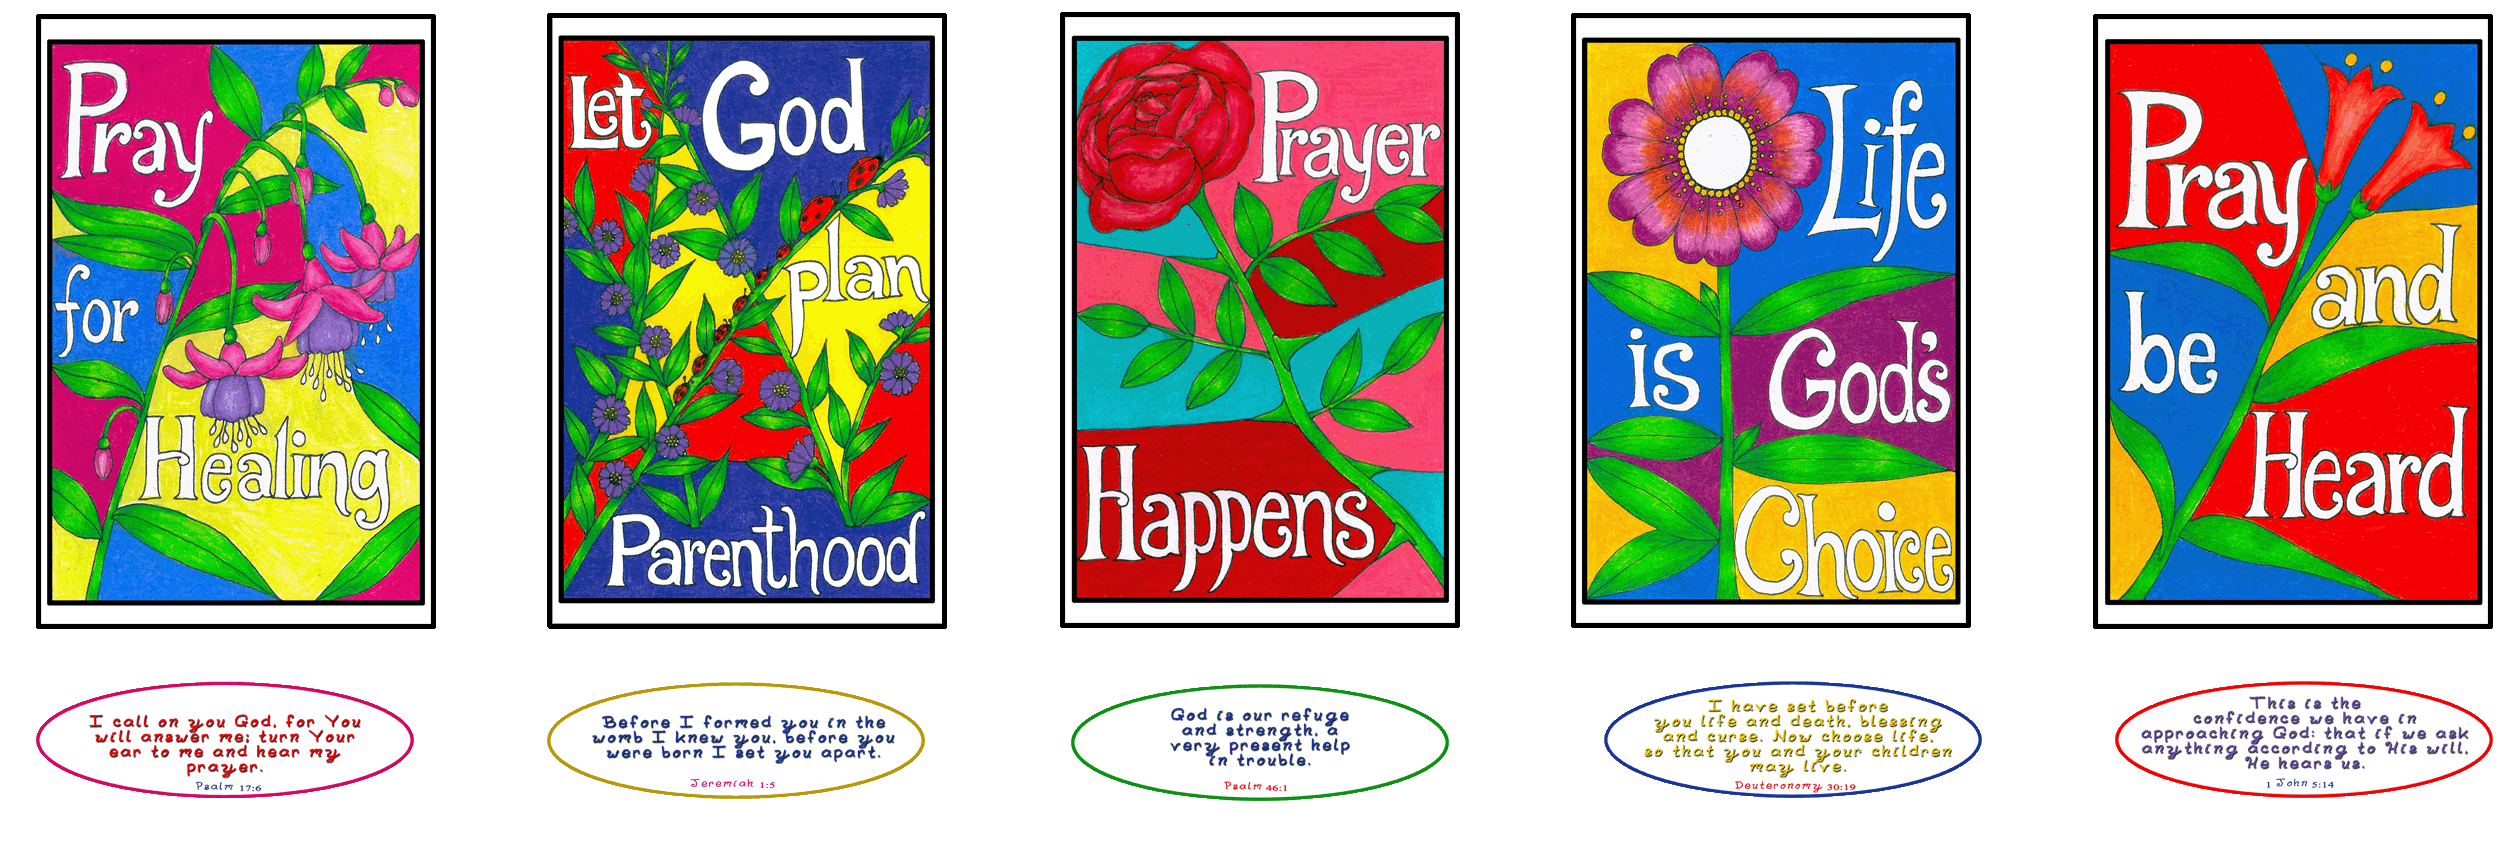 Life and Prayer Mini Posters